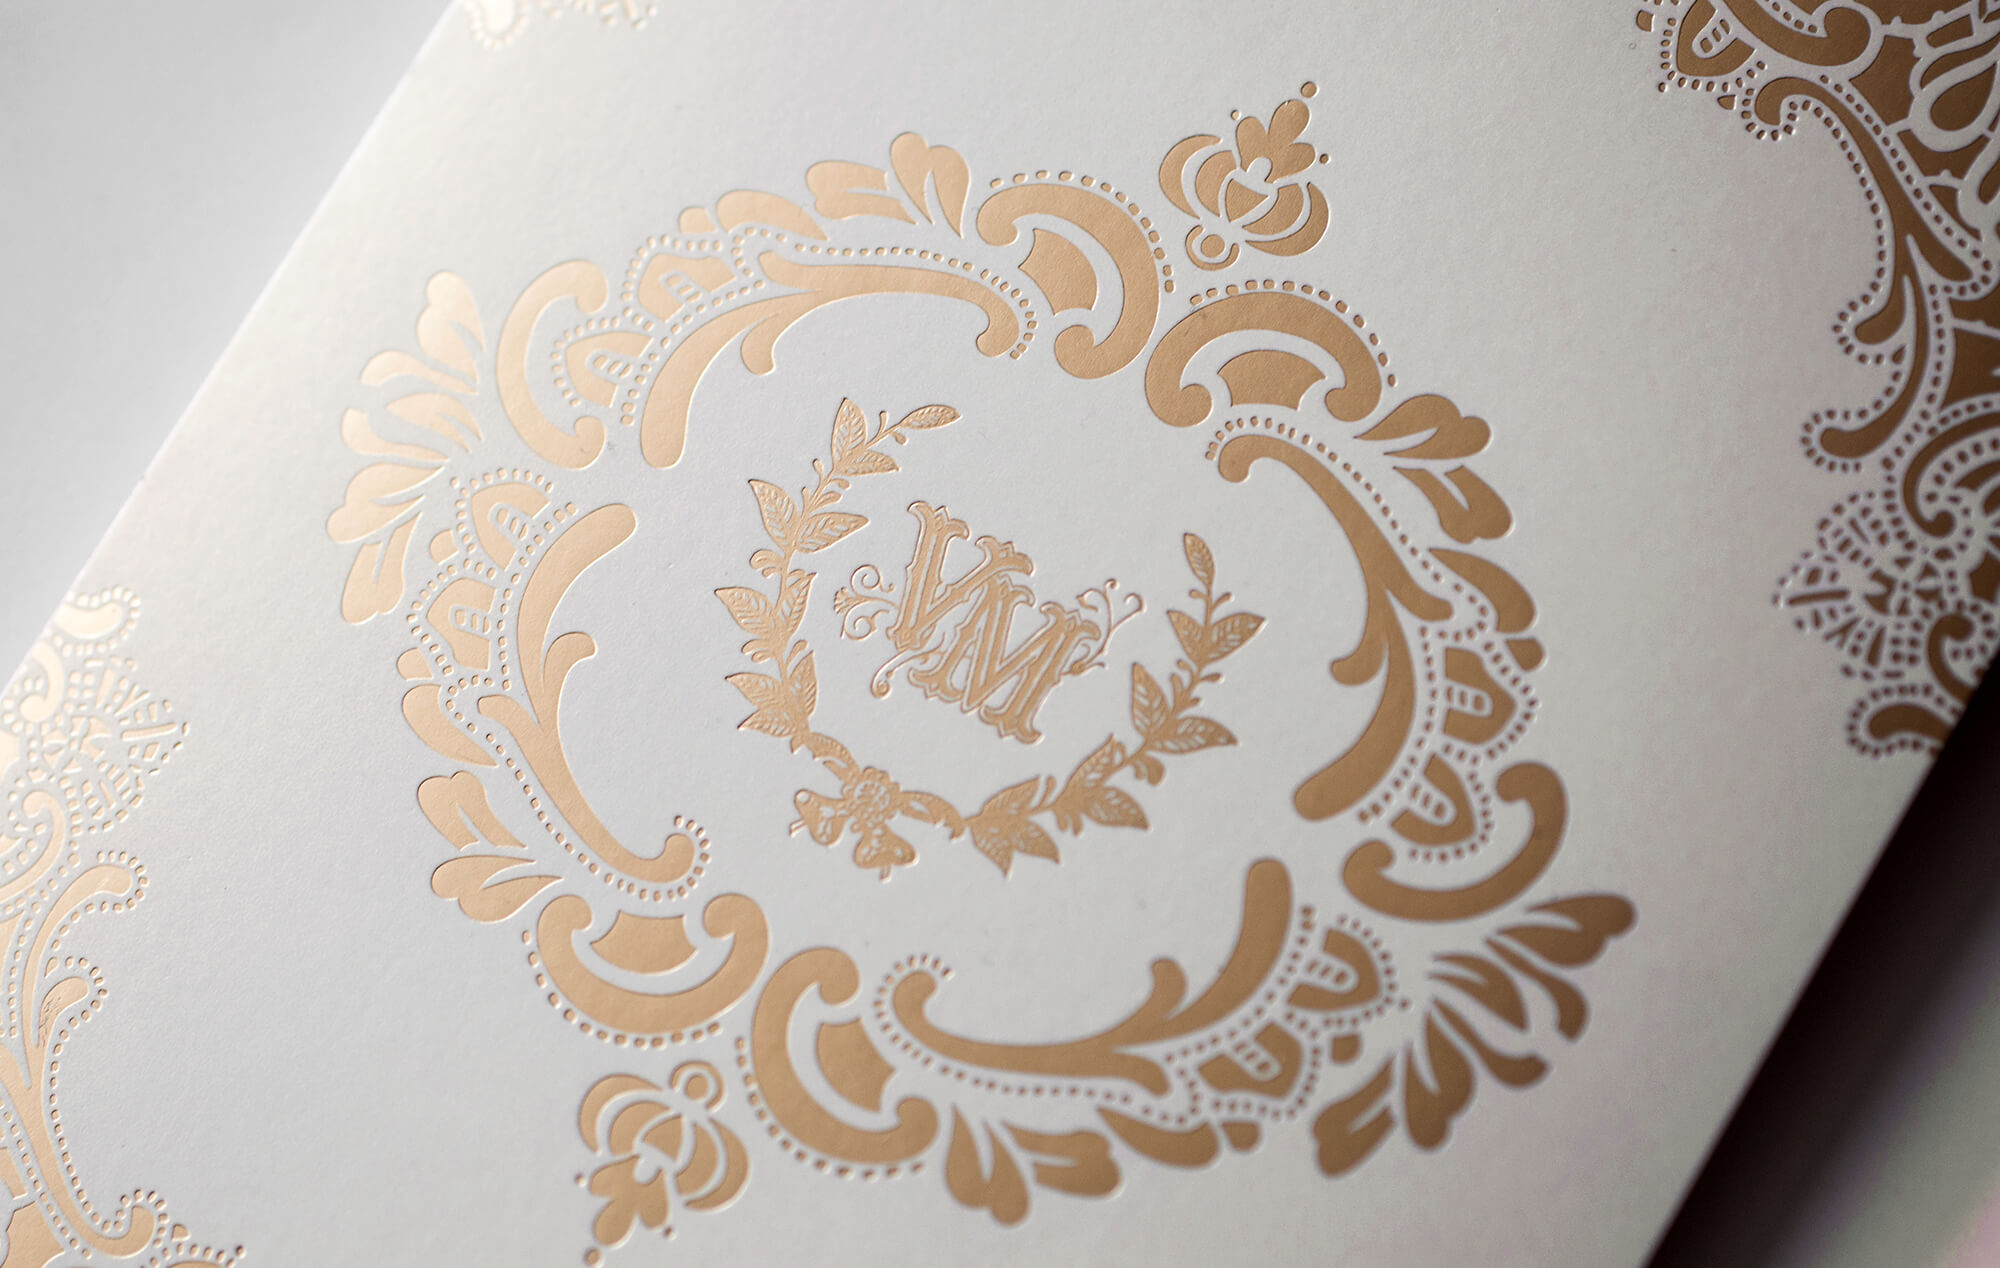 Gold foil monogram and ornate lace border